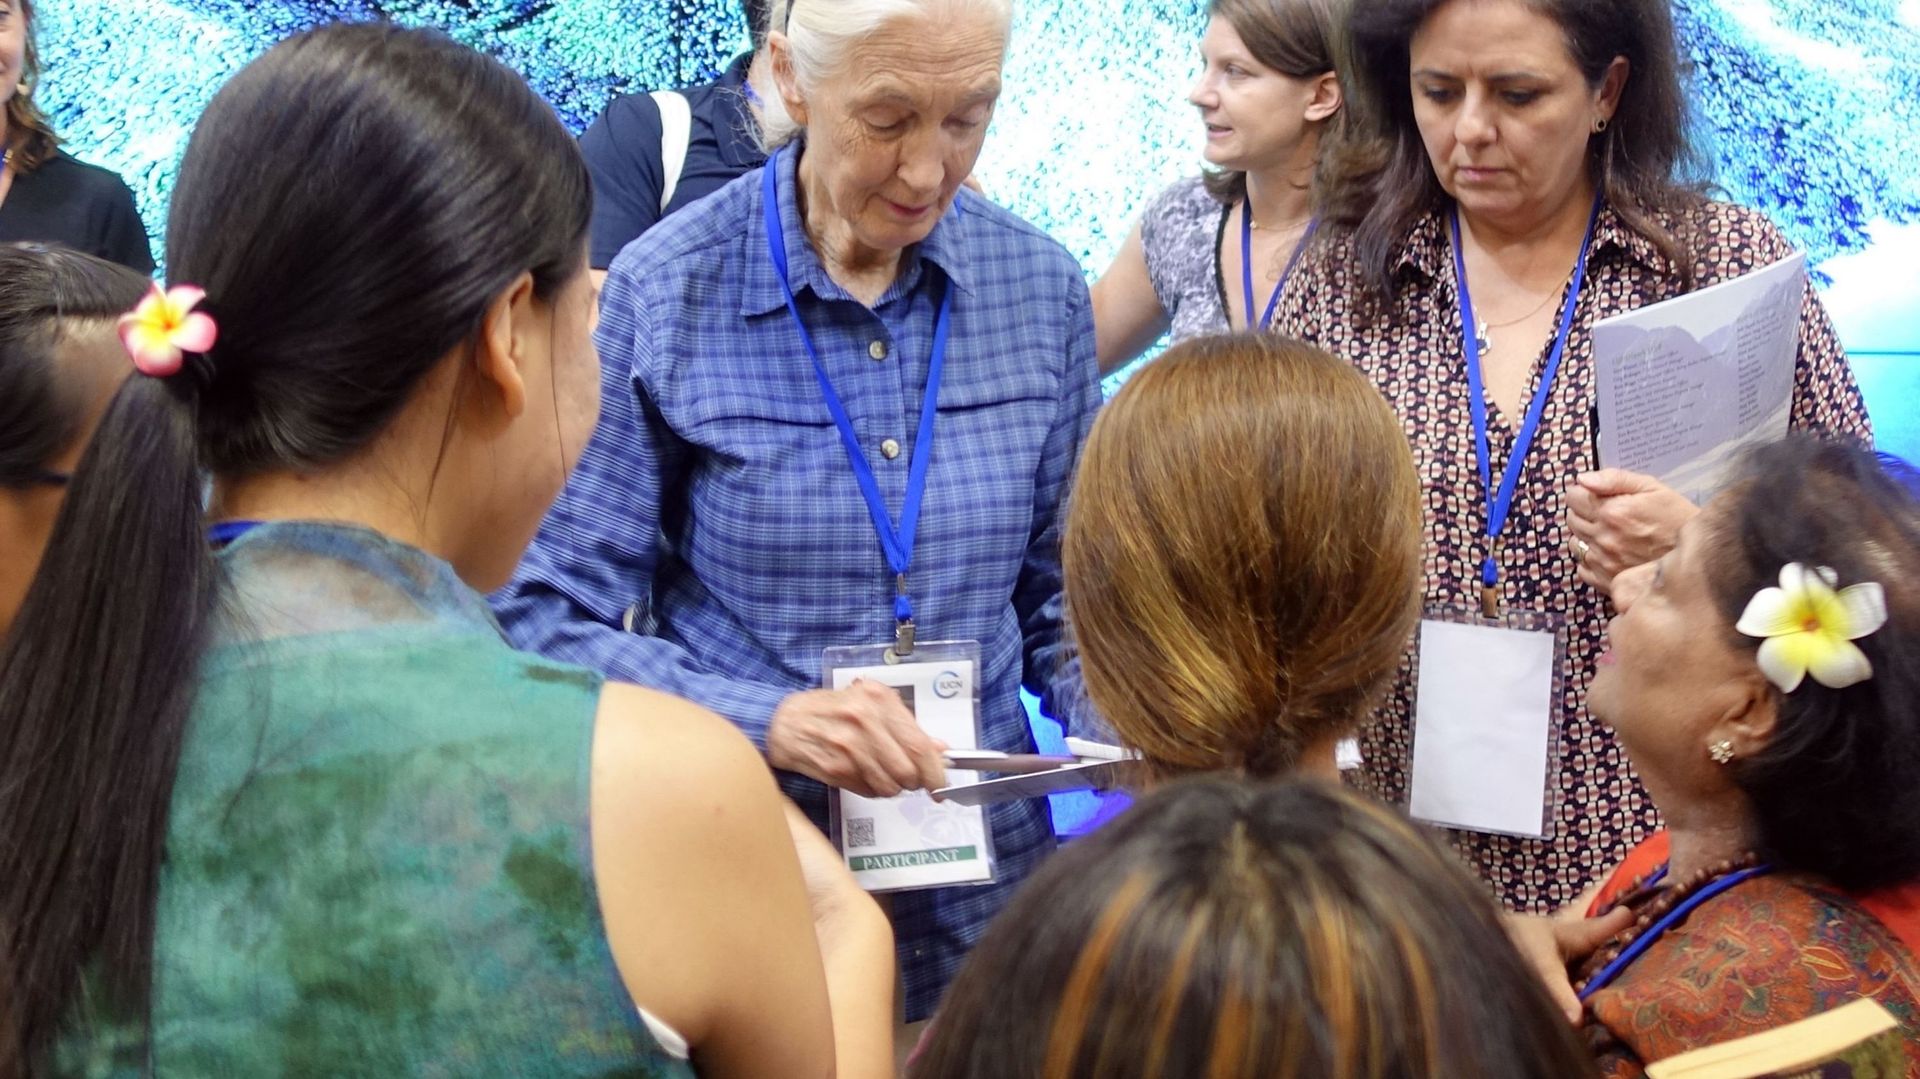 La primatologue Jane Goodall le 2 septembre 2016 à Honolulu, Hawaii